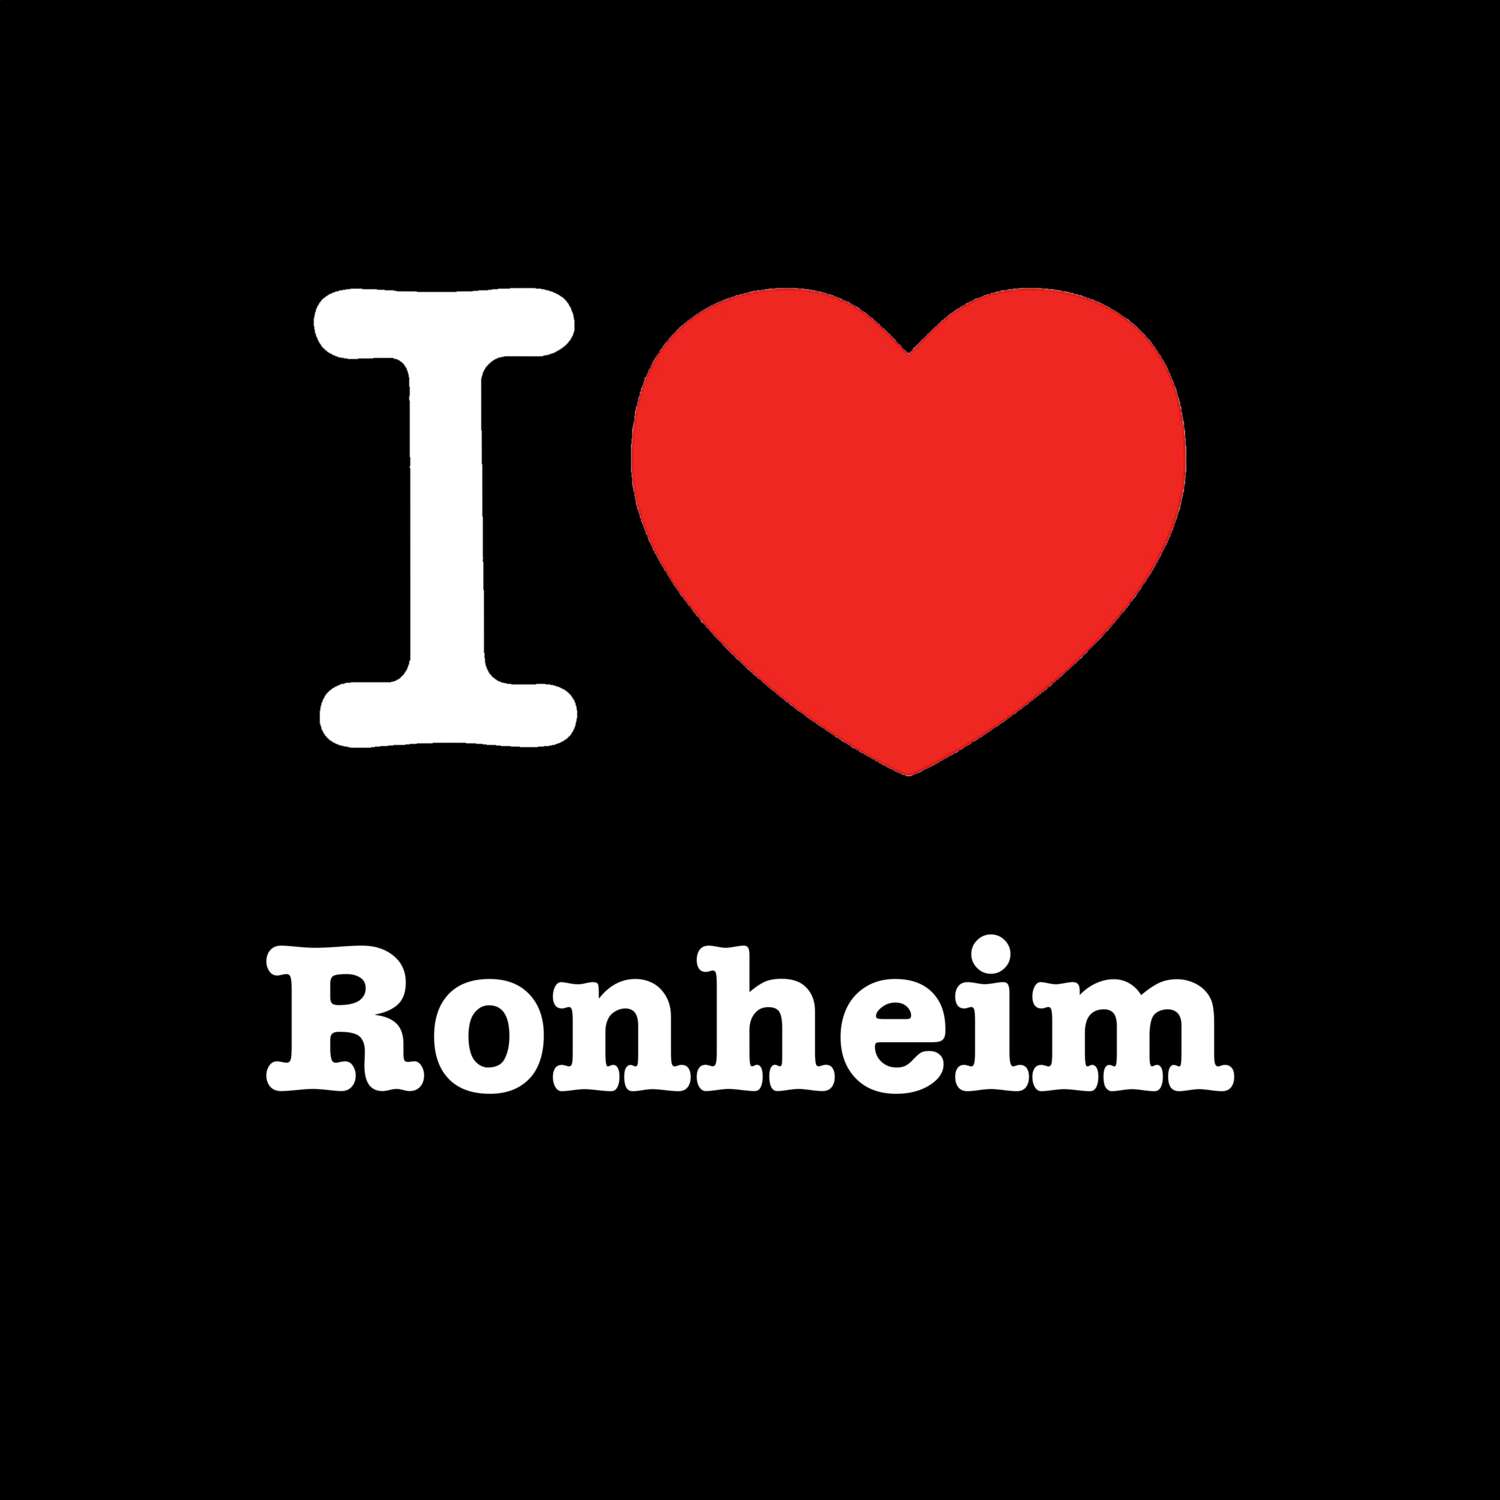 Ronheim T-Shirt »I love«